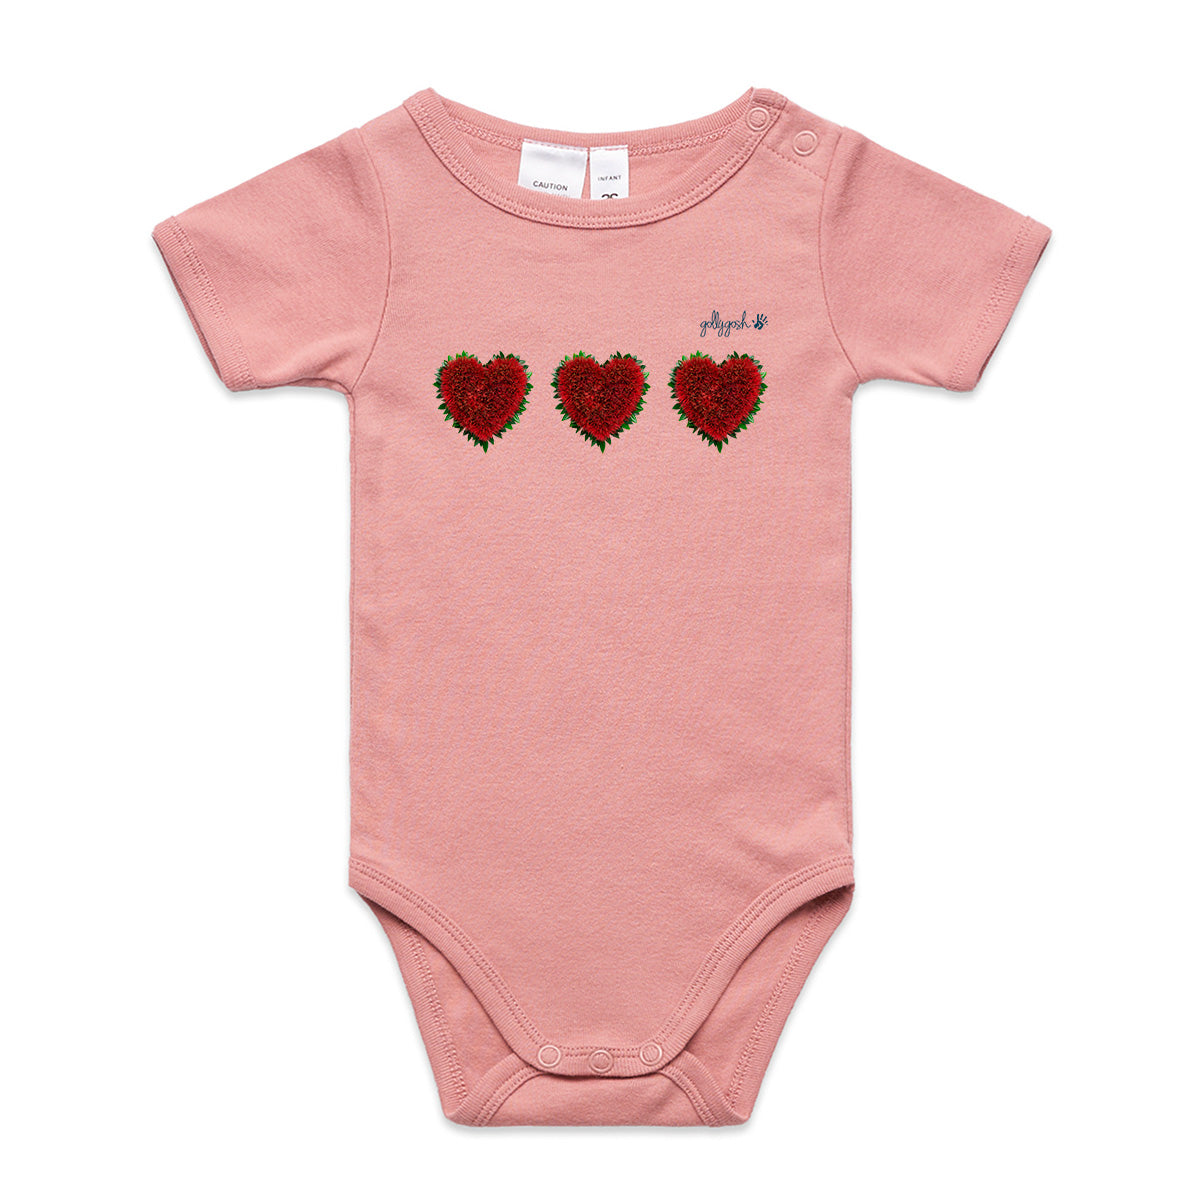 Pohutukawa Hearts - Infant Baby Grow